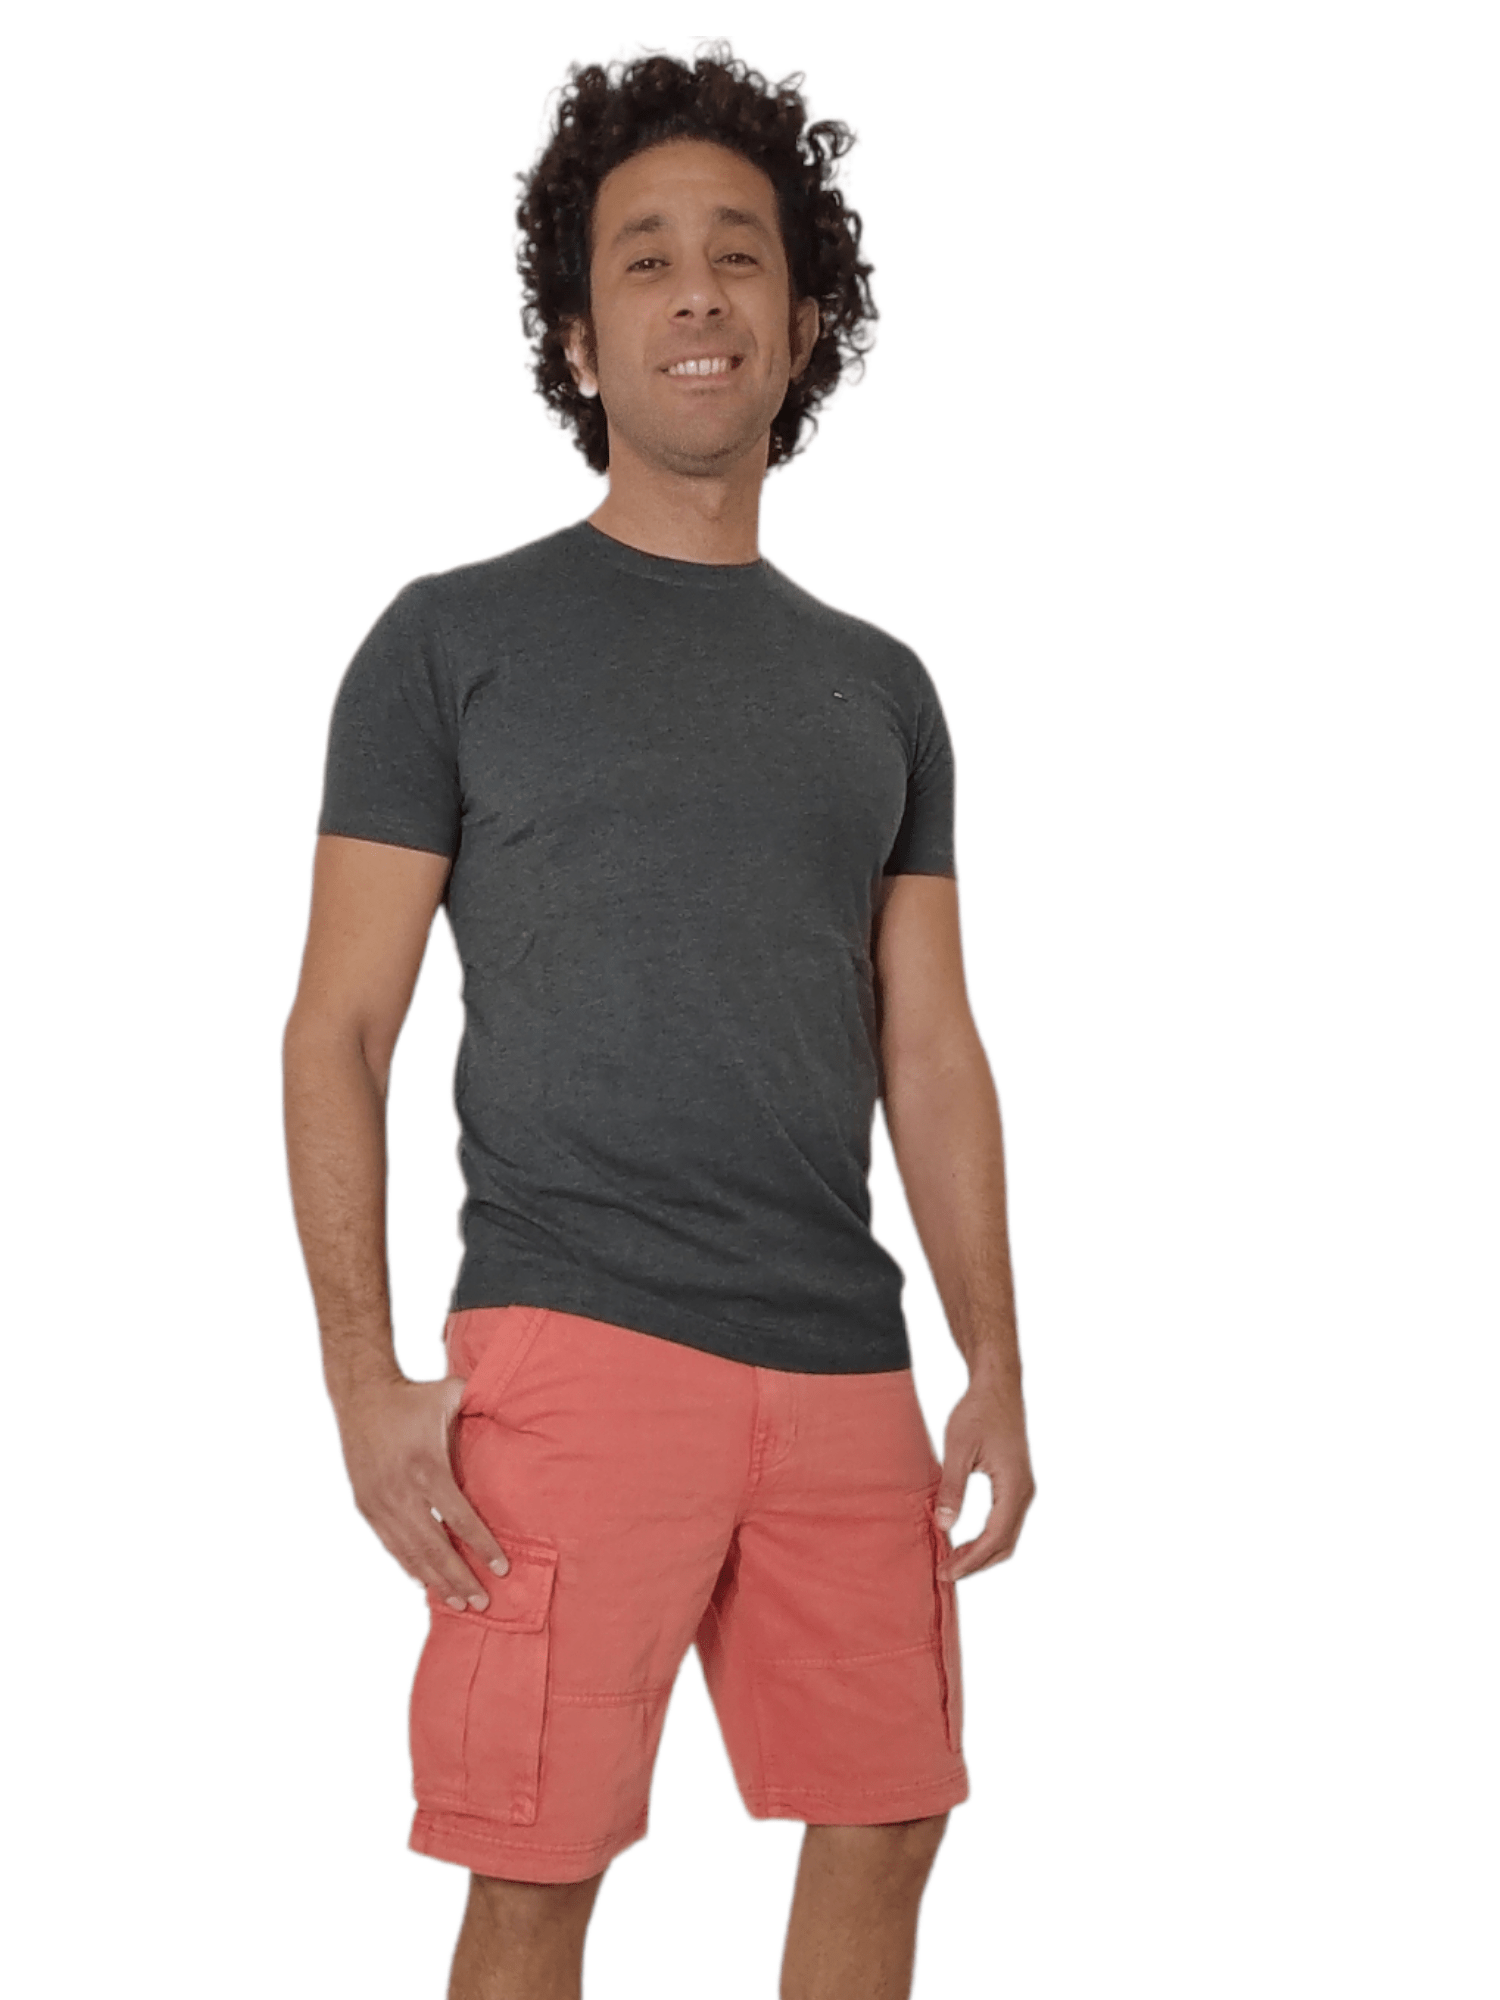 ElOutlet - Men Summer Men Shorts Men Cargo Shorts (Mantaray) - Watermelon Red